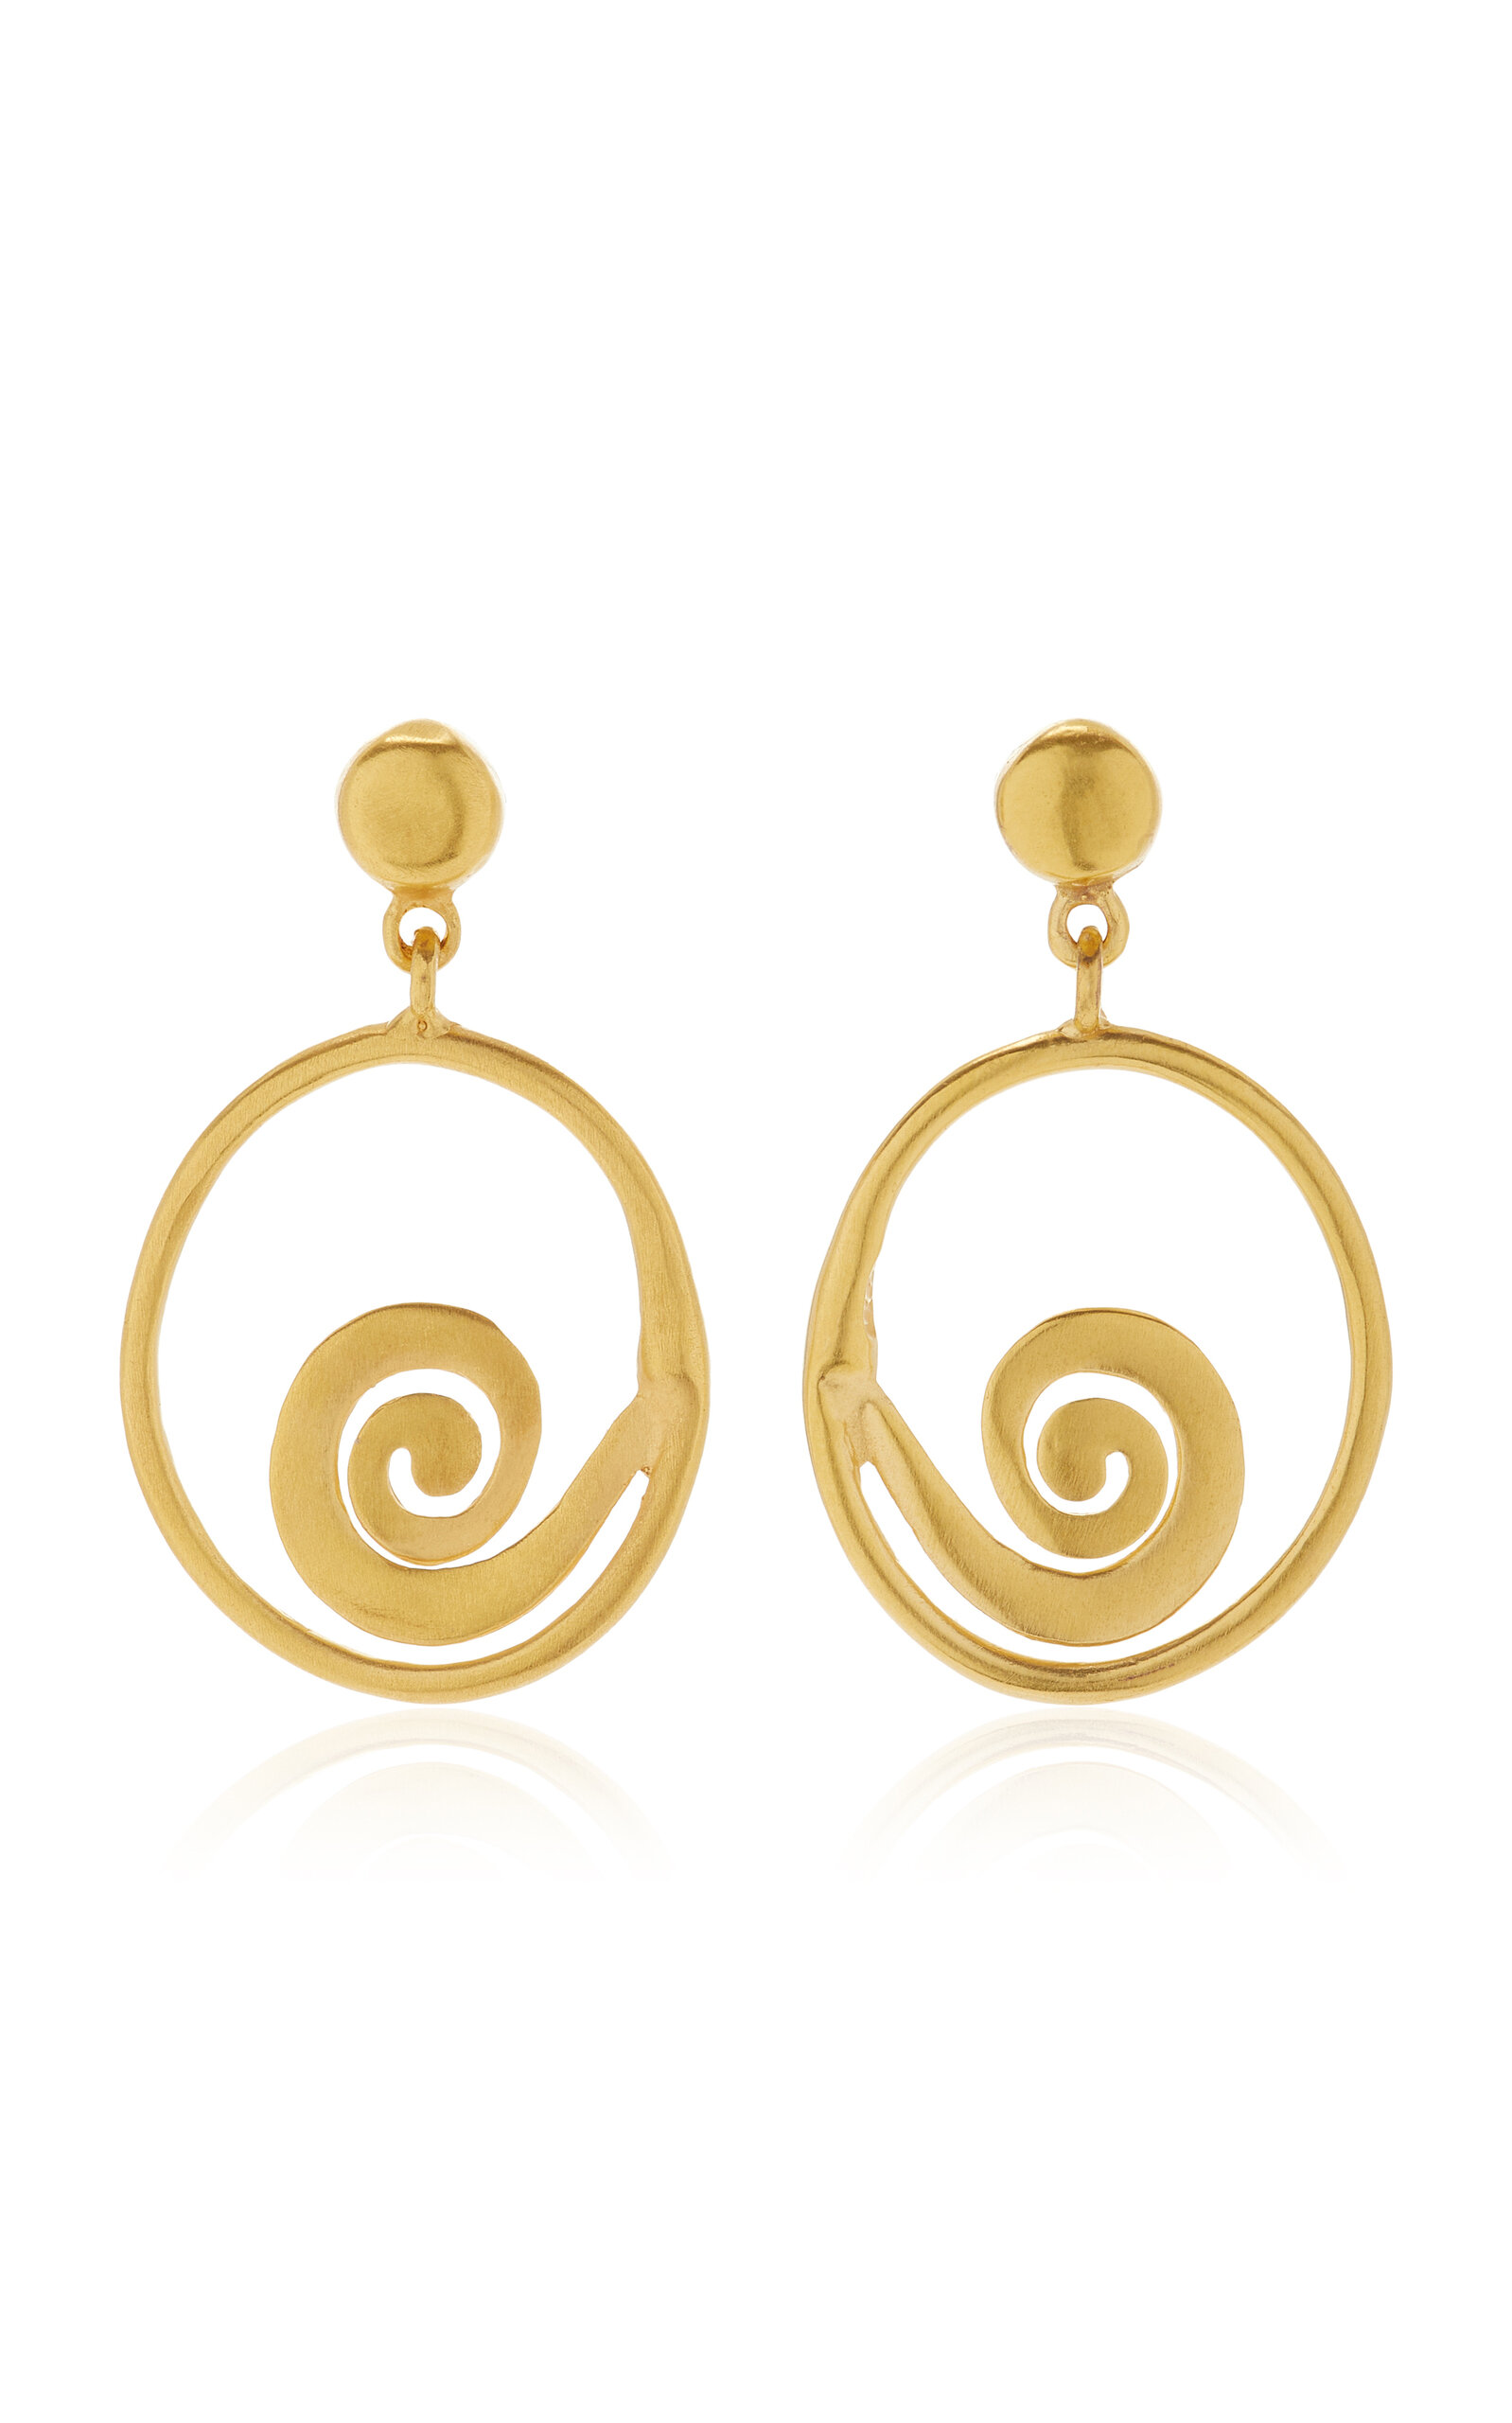 Miraña 24K Gold-Plated Earrings